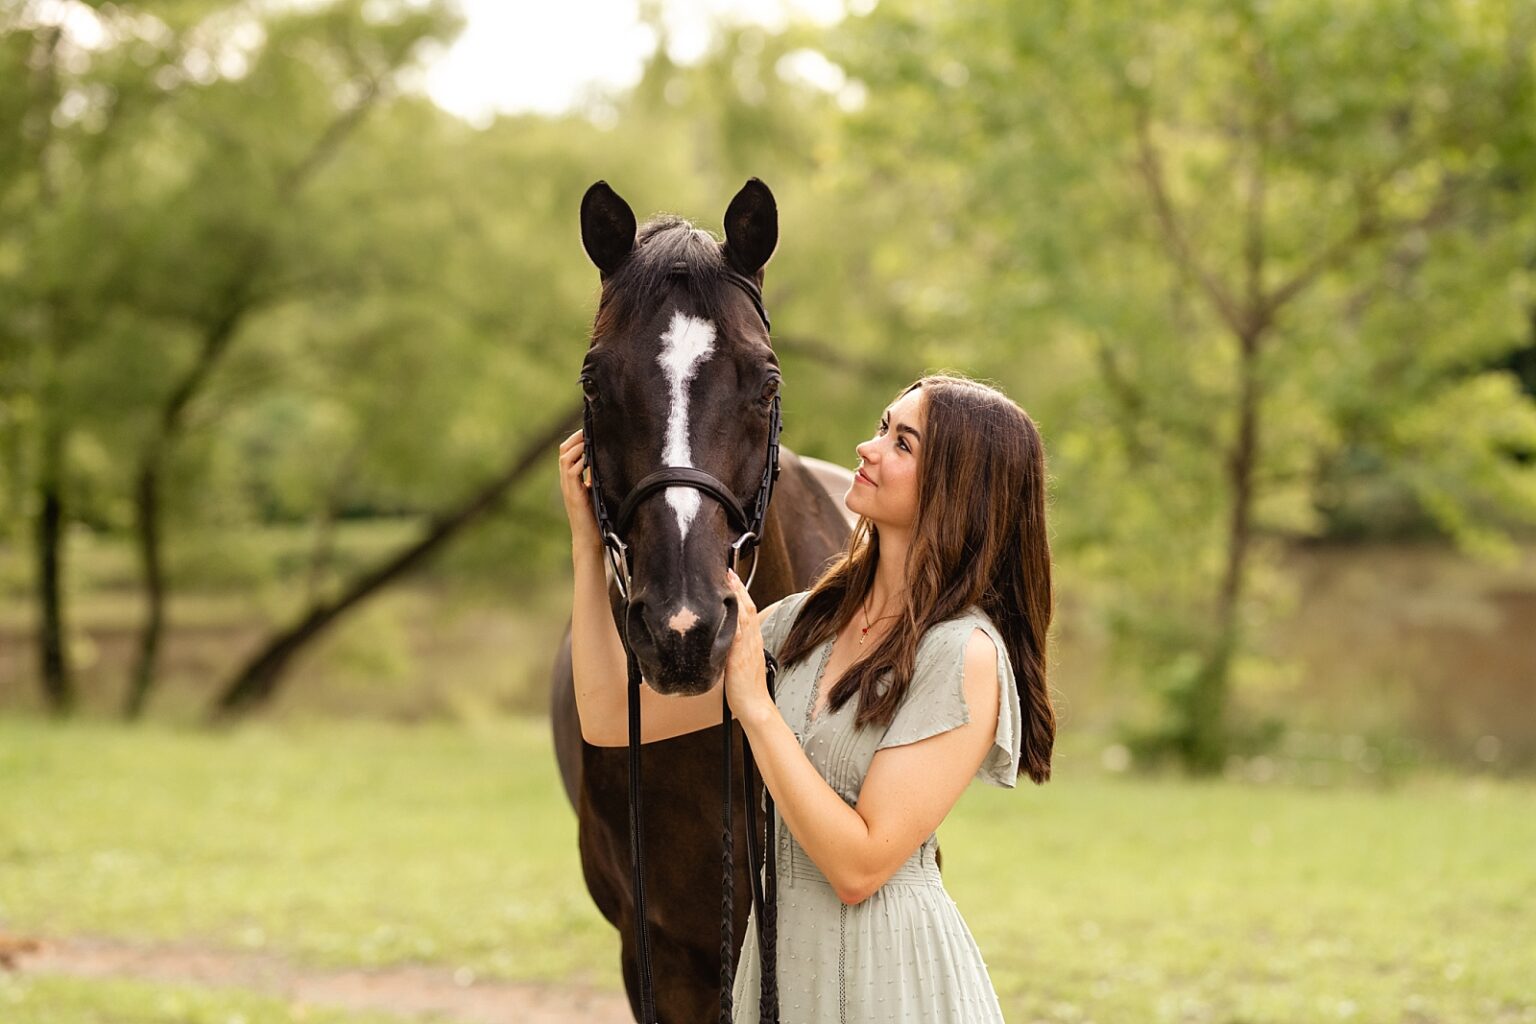 Alabama Hunter Jumper Association member has photos taken with her horse at Fox Lake Farm in Birmingham, Alabama.